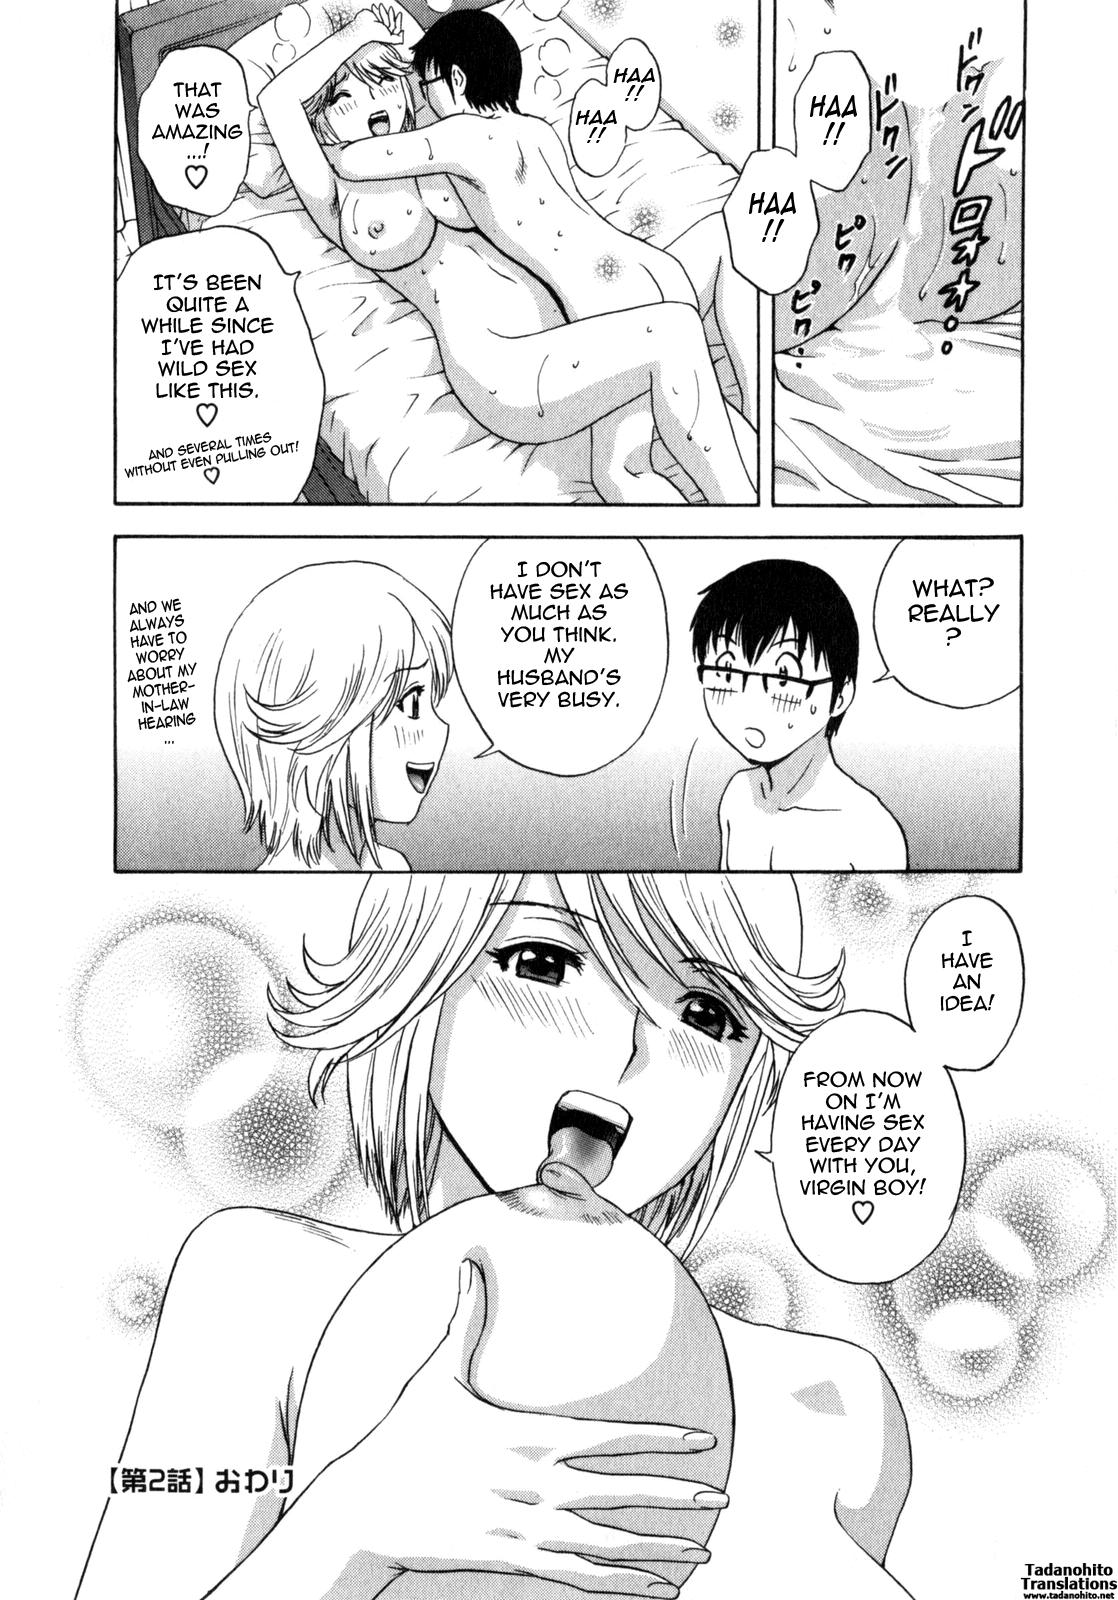 [Hidemaru] Life with Married Women Just Like a Manga 1 - Ch. 1-4 [English] {Tadanohito} 43